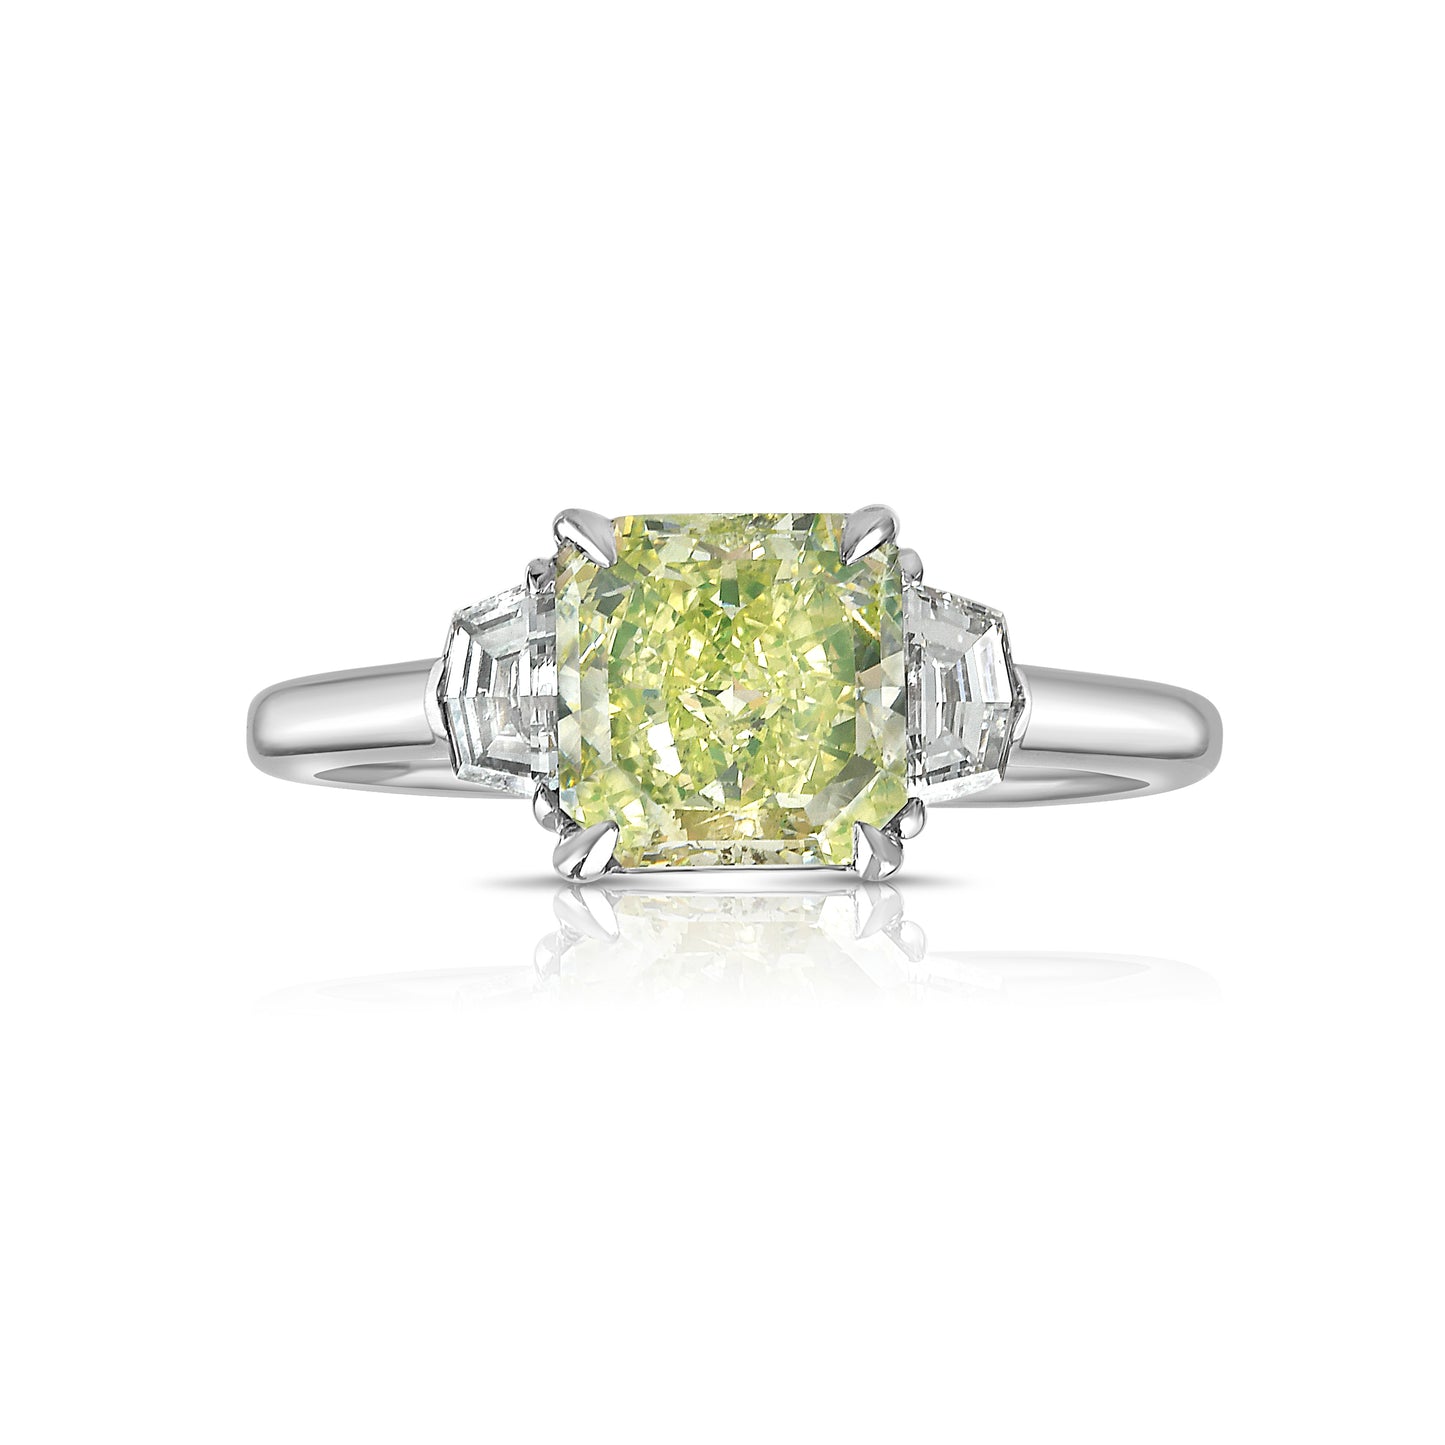 Green diamond like Jennifer Lopez. JLO Green diamond. JLO Green.Fancy intense green diamond radiant. Fancy intense green diamond. Natural green diamond. Green diamond engagement ring. Green diamond ring. Rare green diamond ring.